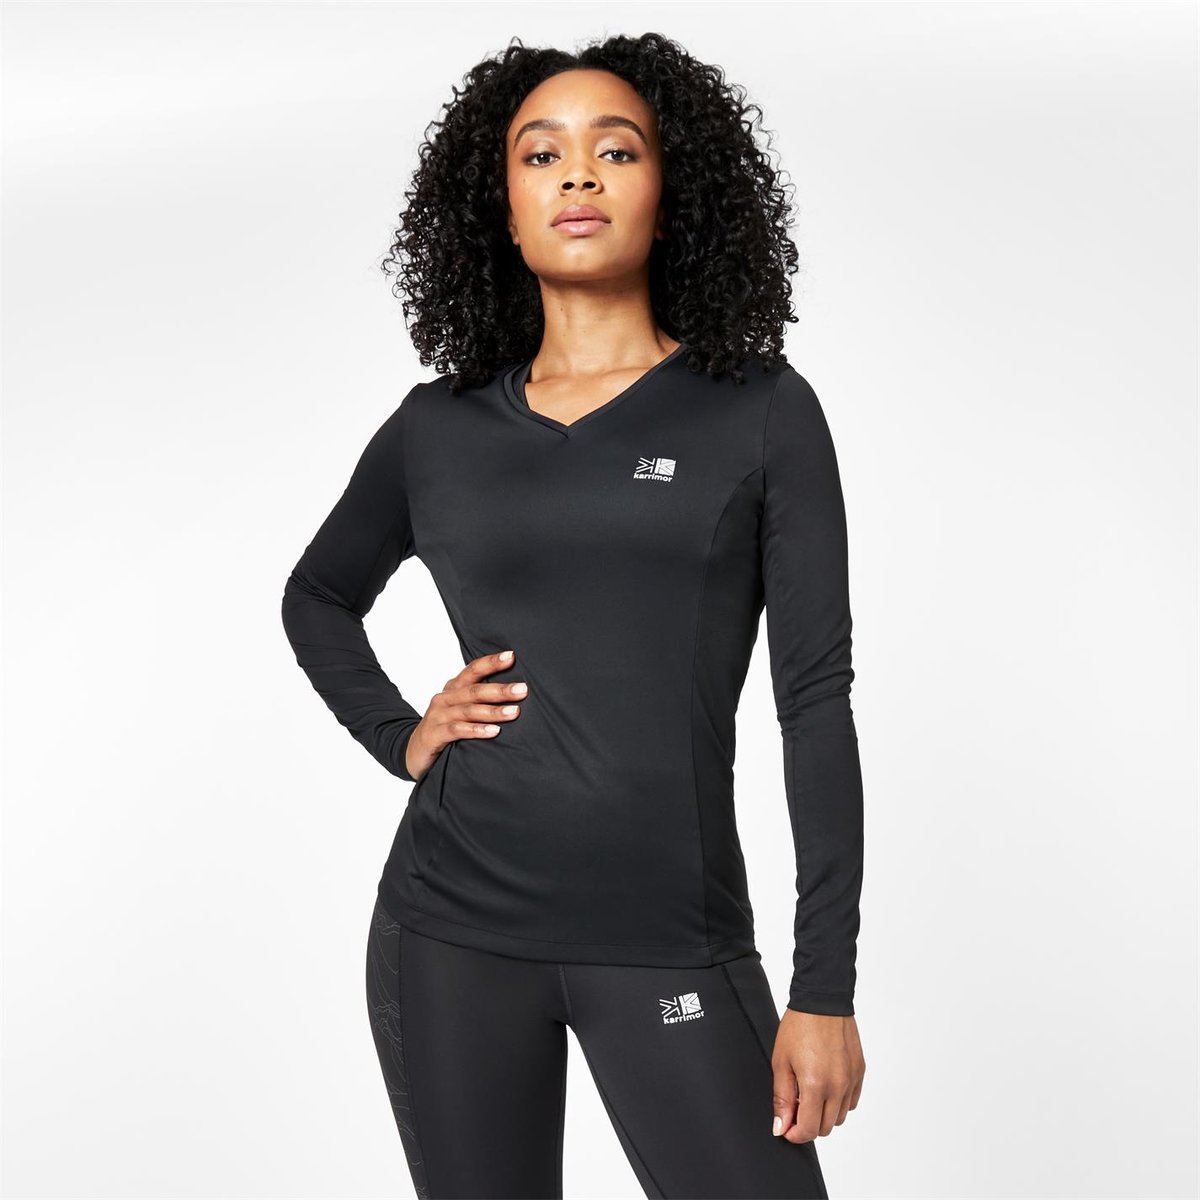 Women's Long Sleeve Zip Up Gym Top - Black